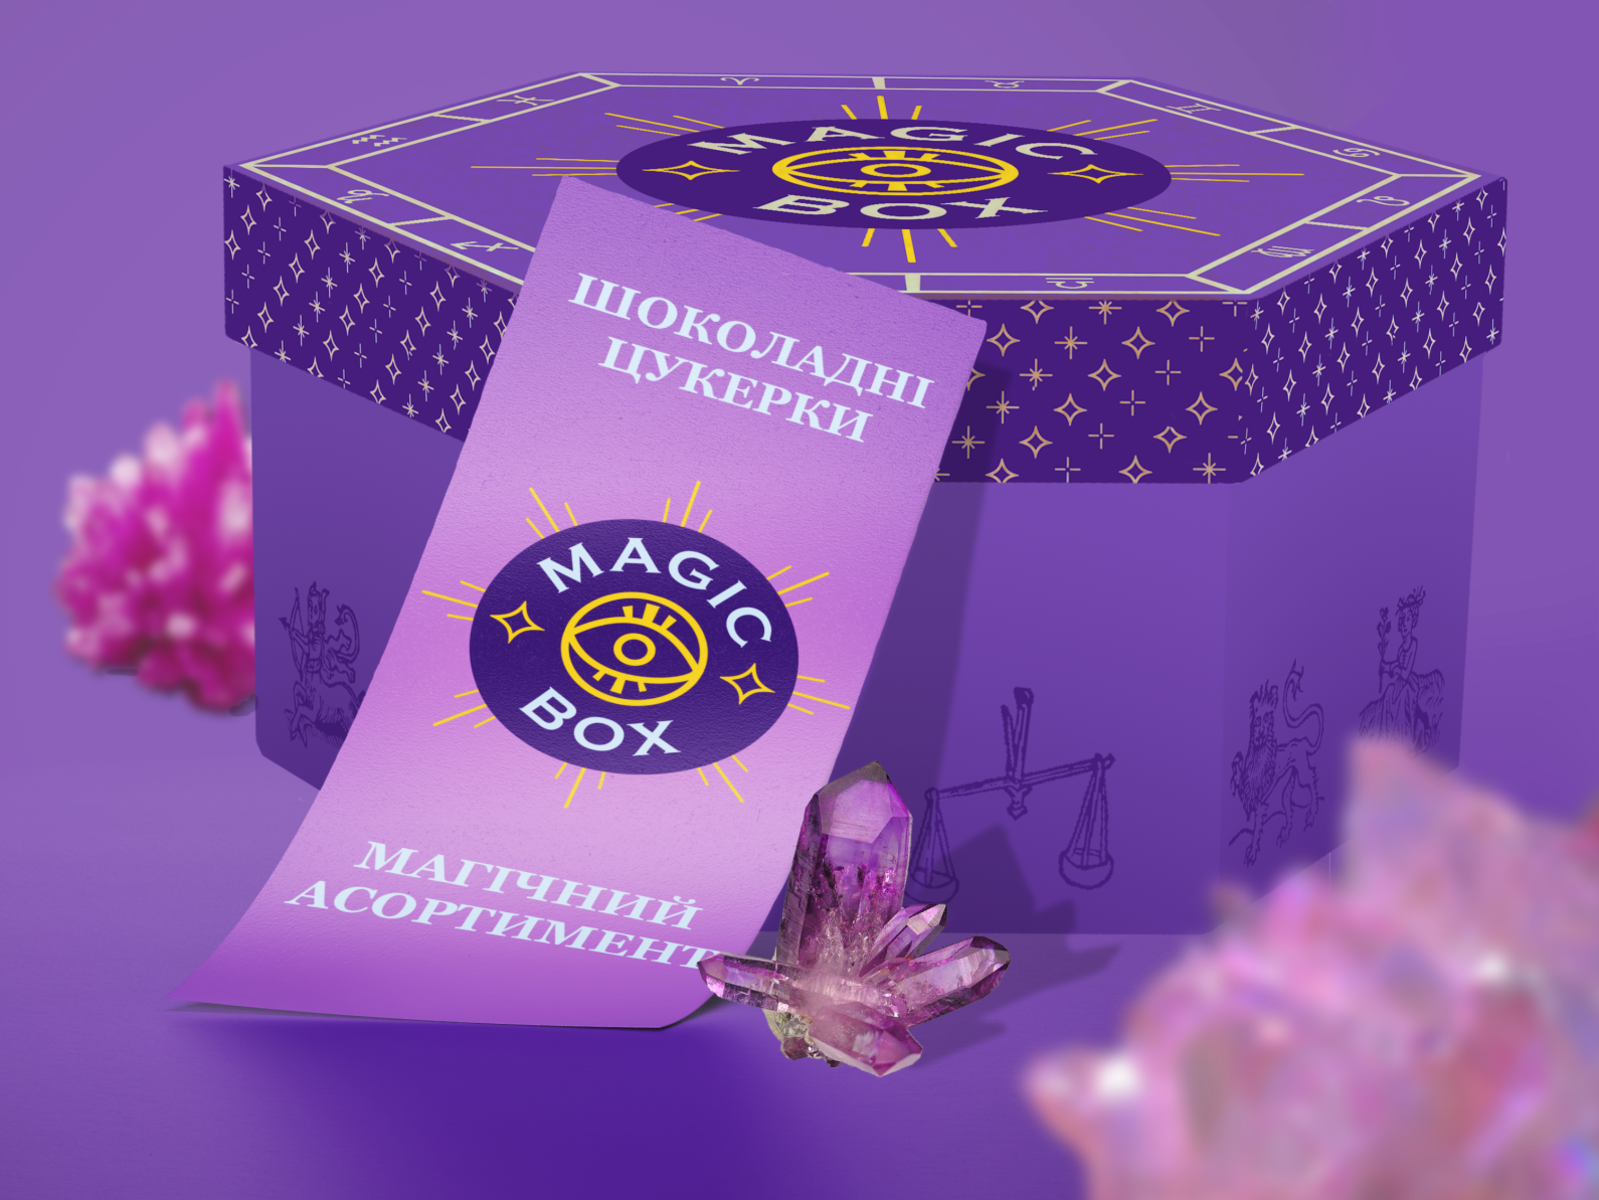 Magic Box packaging design for chocolates by Ira Prykhodko on Dribbble